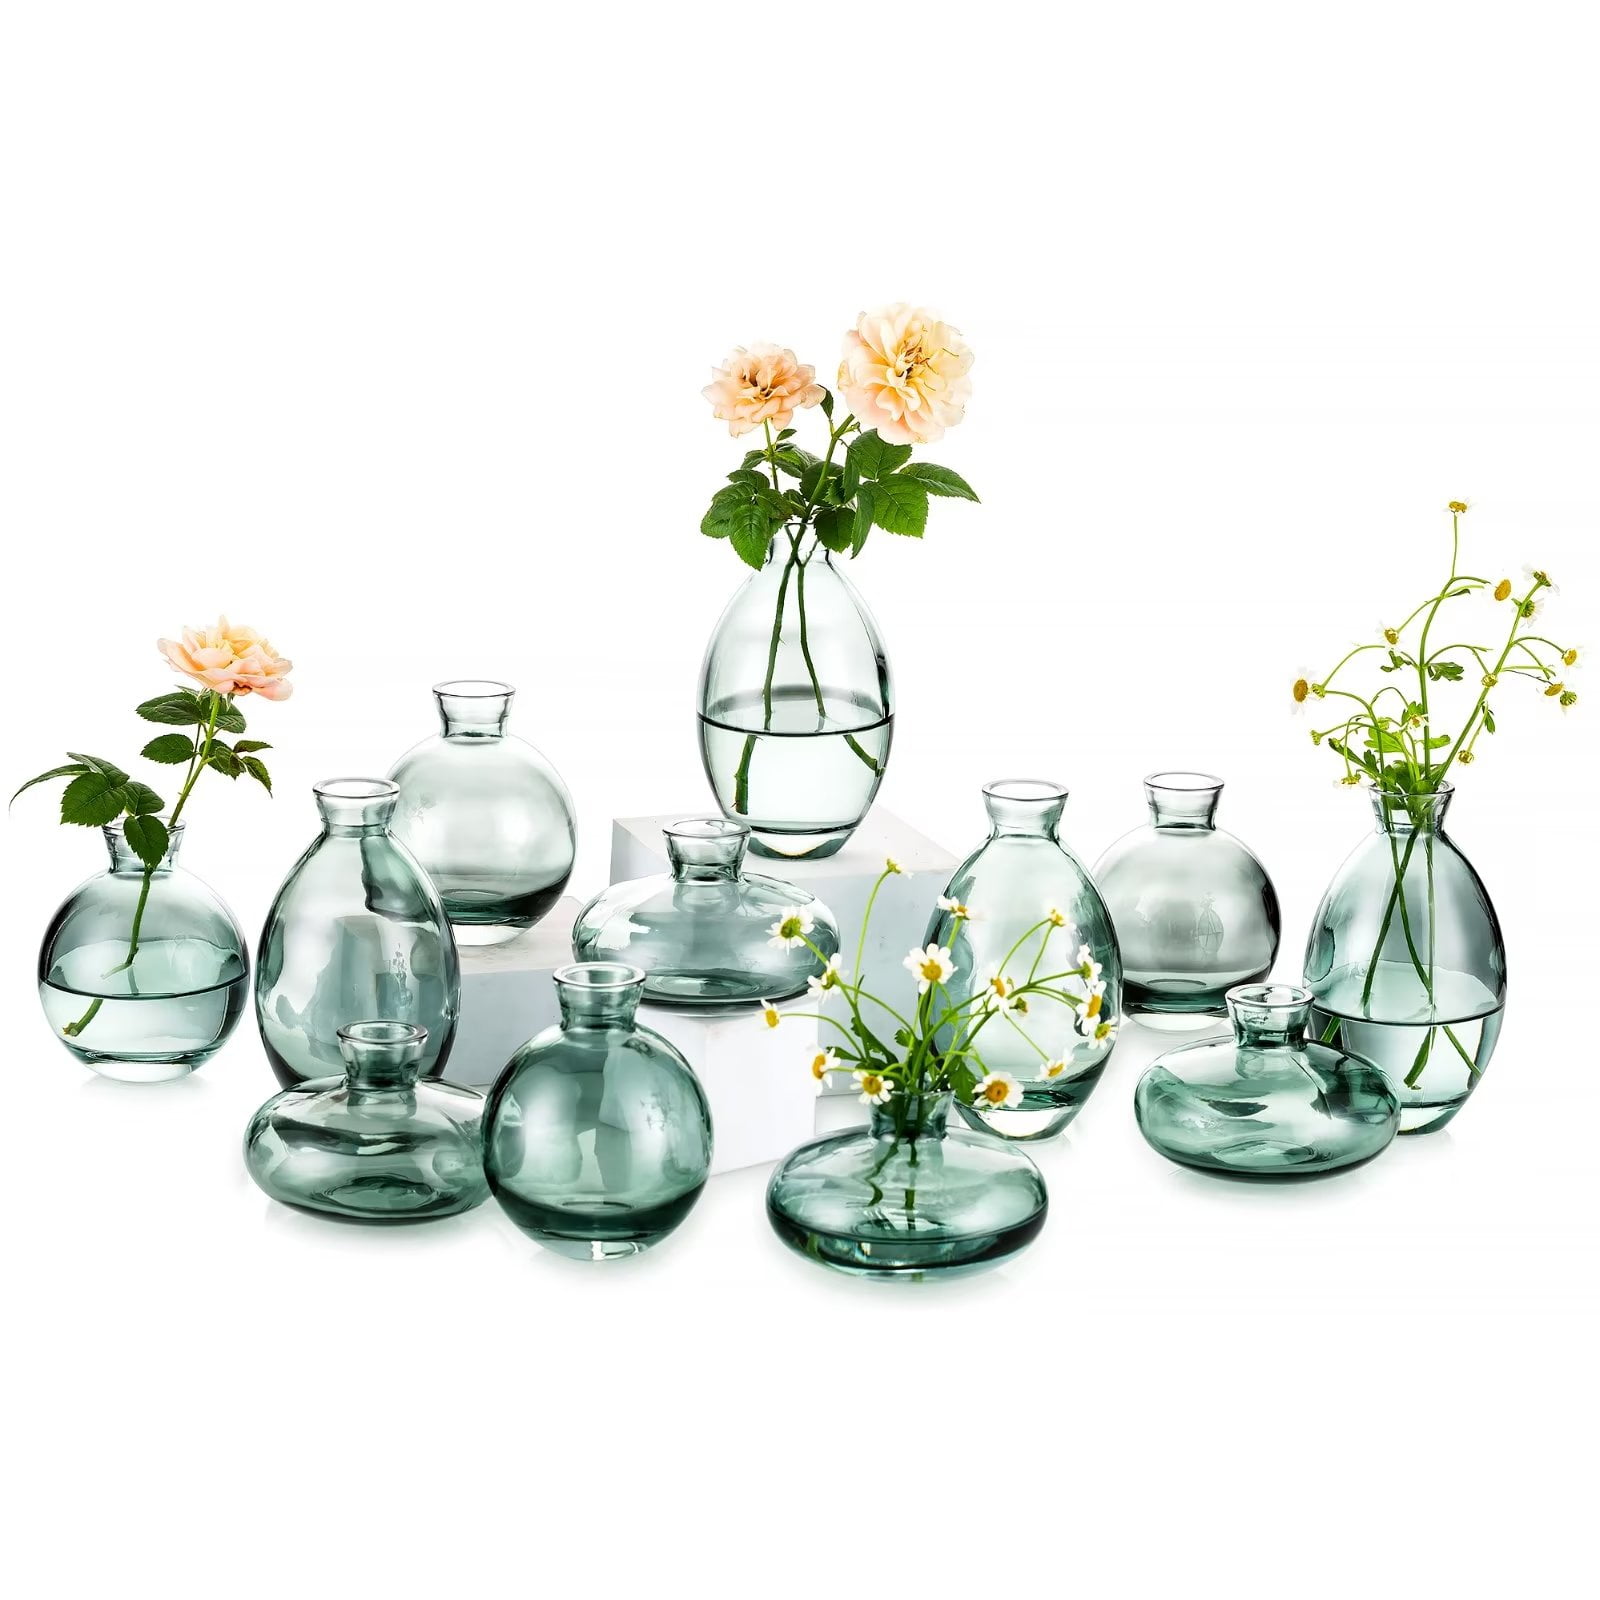 Glasseam Mini Bud Vases for Flowers Set of 12 Green Small Glass